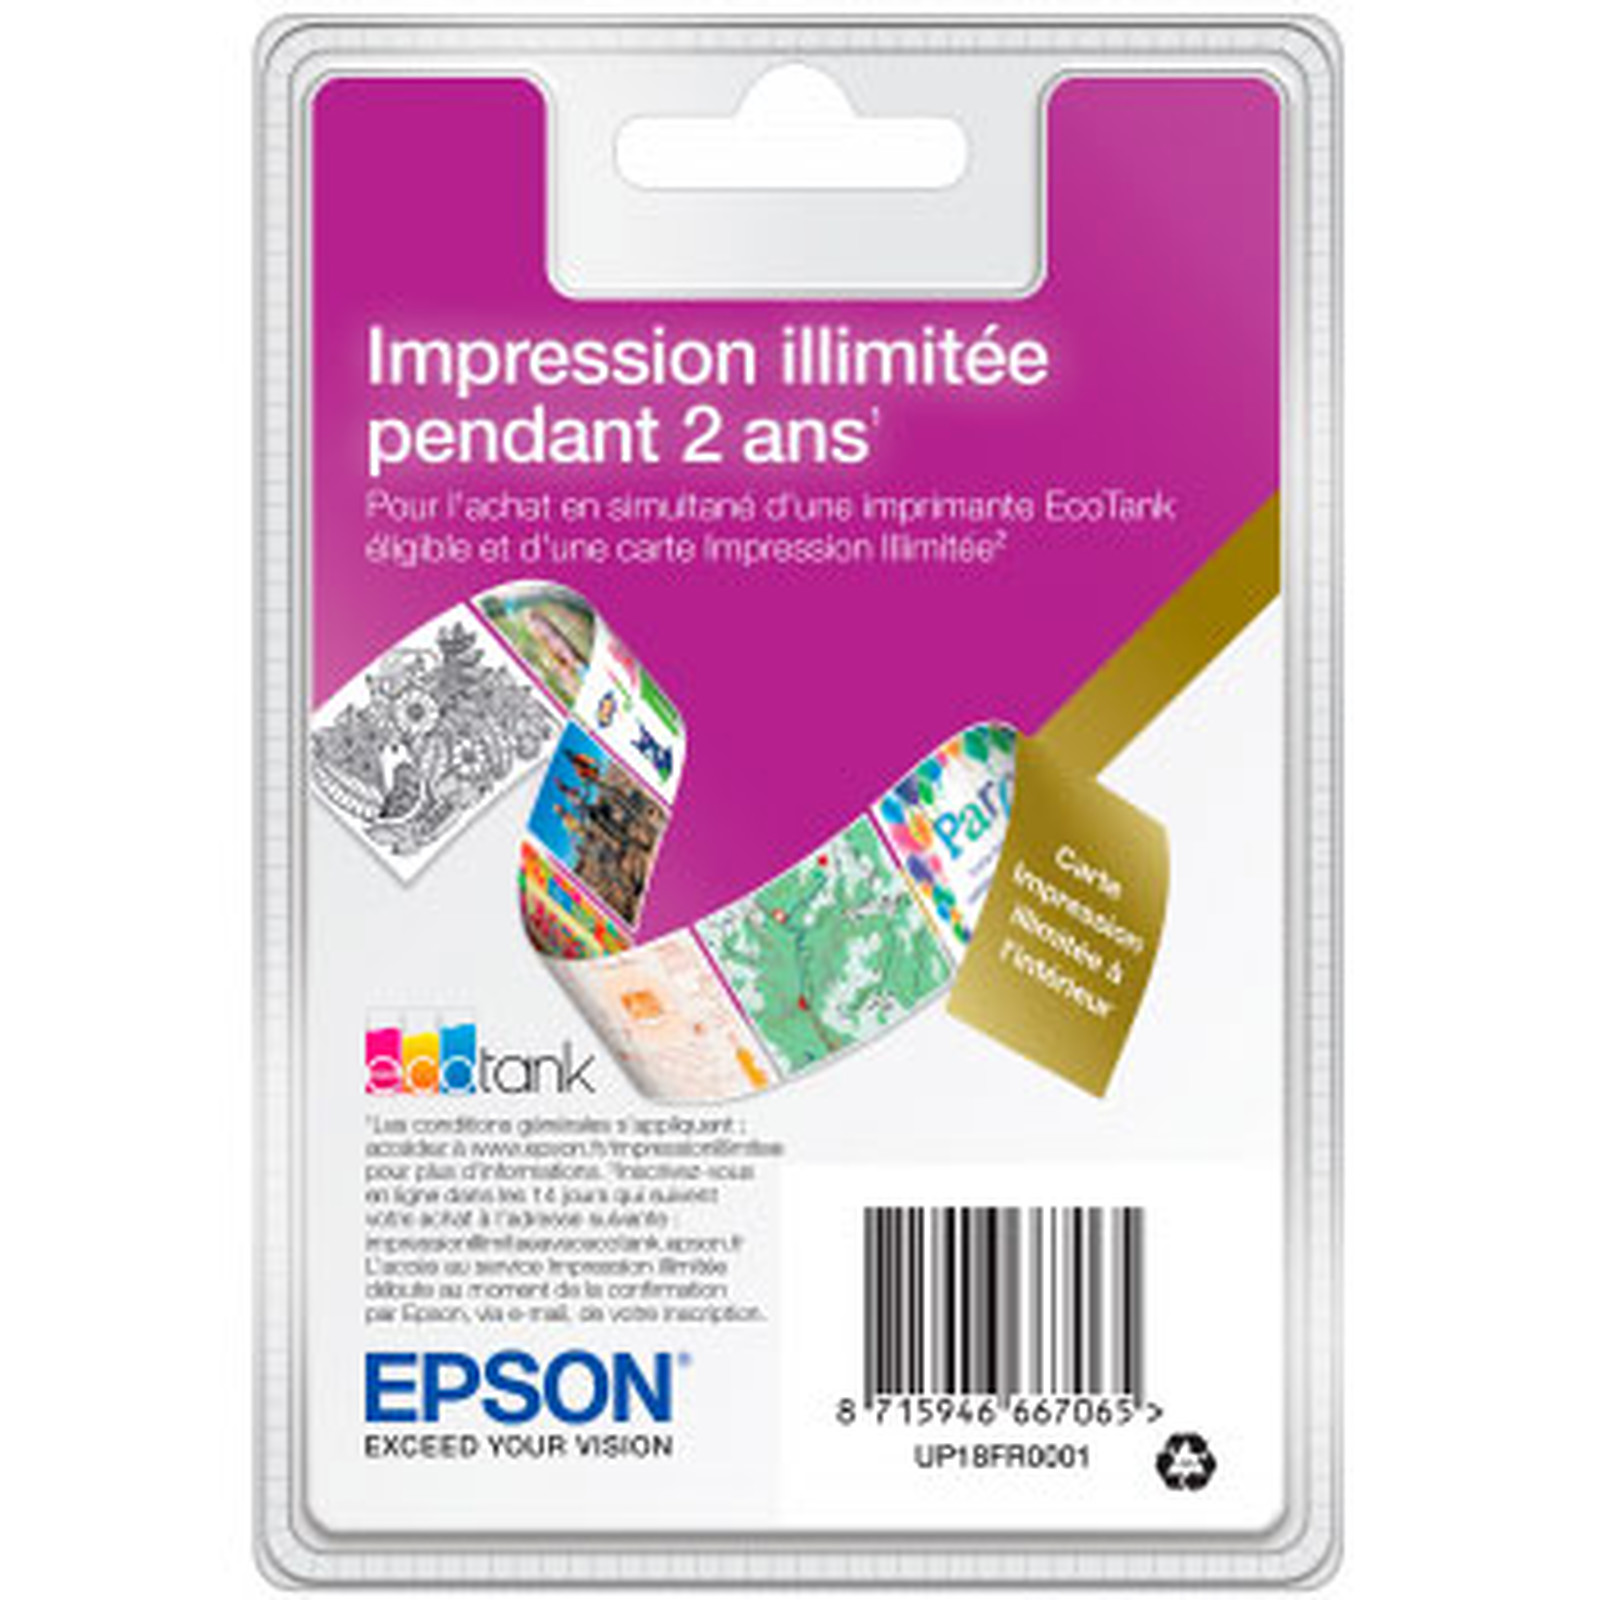 Epson Ecotank Unlimited Printing - Accessoires imprimante Epson